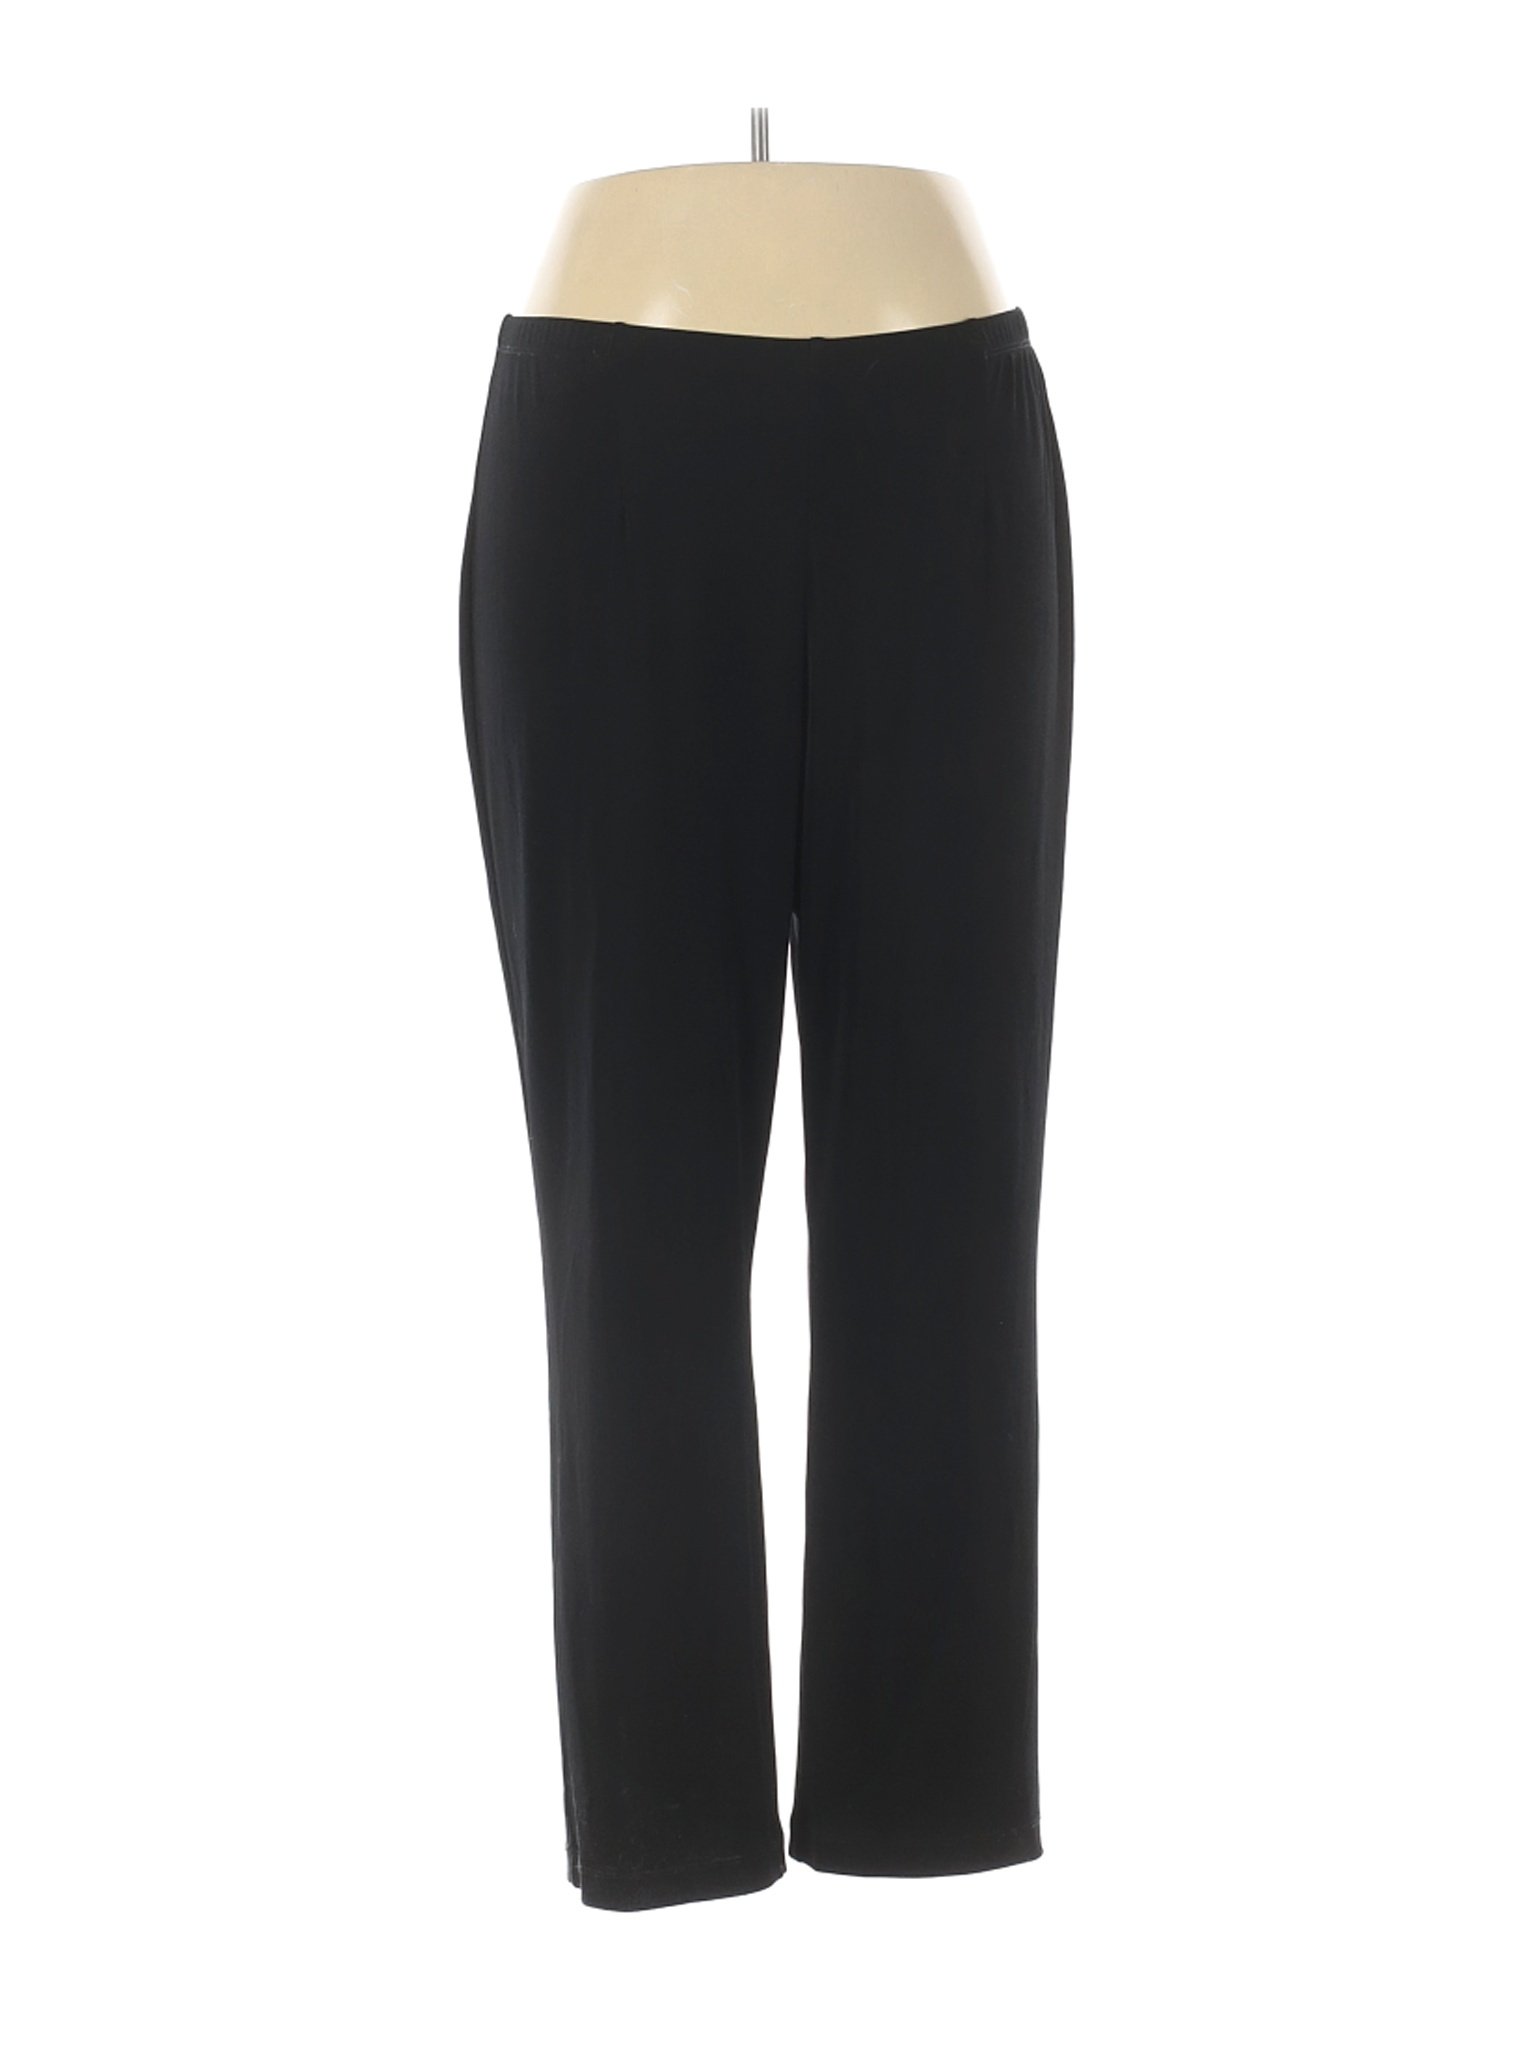 Easywear by Chico's Women Black Casual Pants XL | eBay